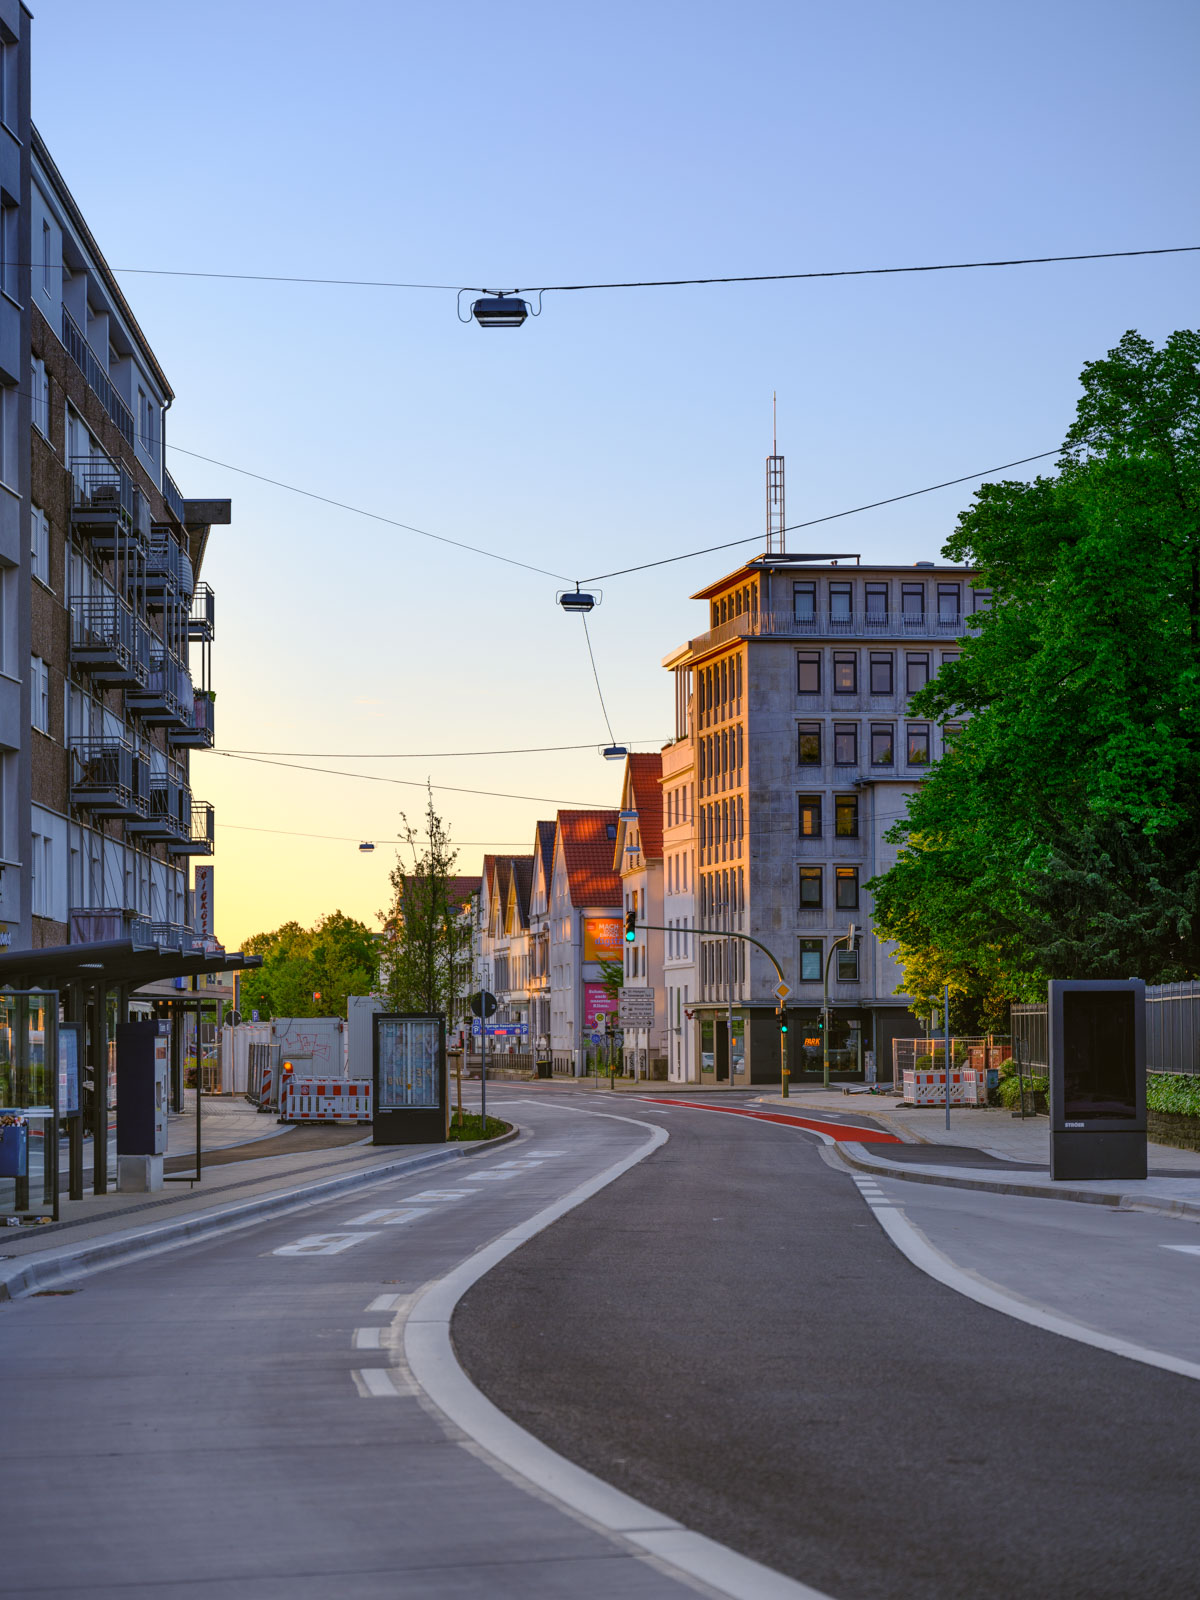 Dawn at the 'Friedrich-Verleger-Straße' in May 2021 (Bielefeld, Germany).